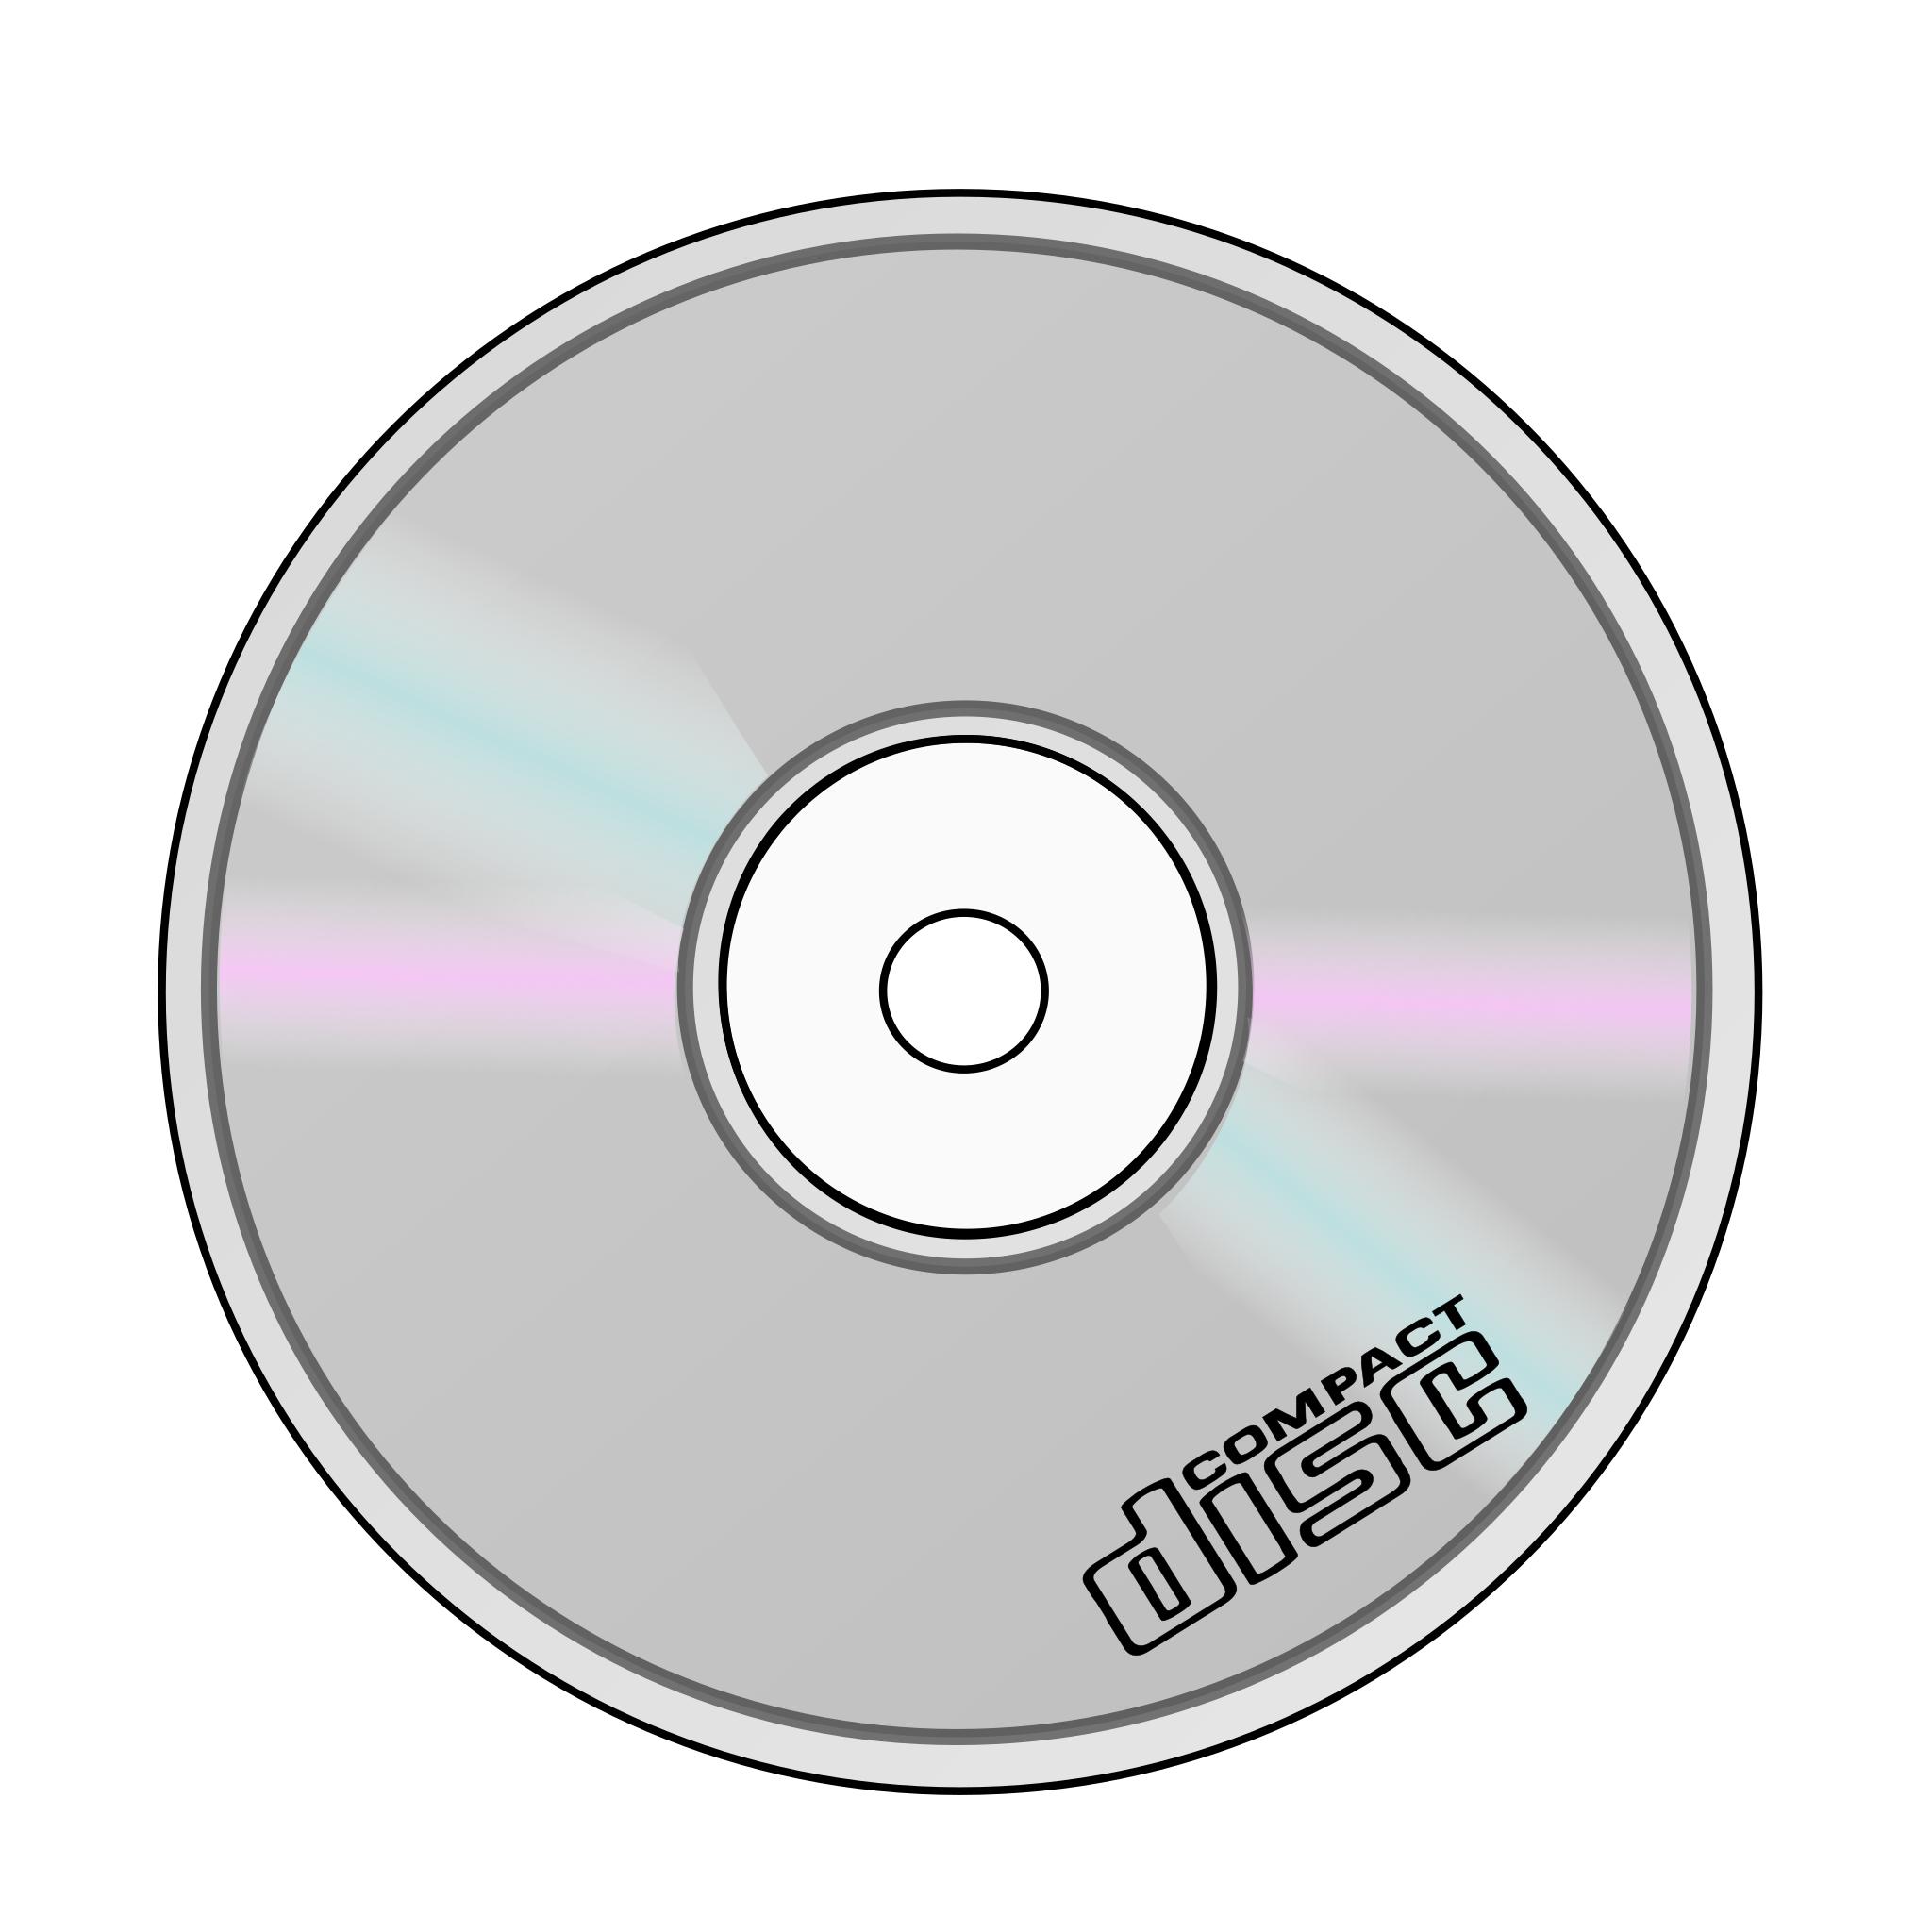 Первая компакт. CD (Compact Disk ROM) DVD (Digital versatile Disc). Compact Disc (CD). Диски CD DVD Blu ray. Первый компакт диск.